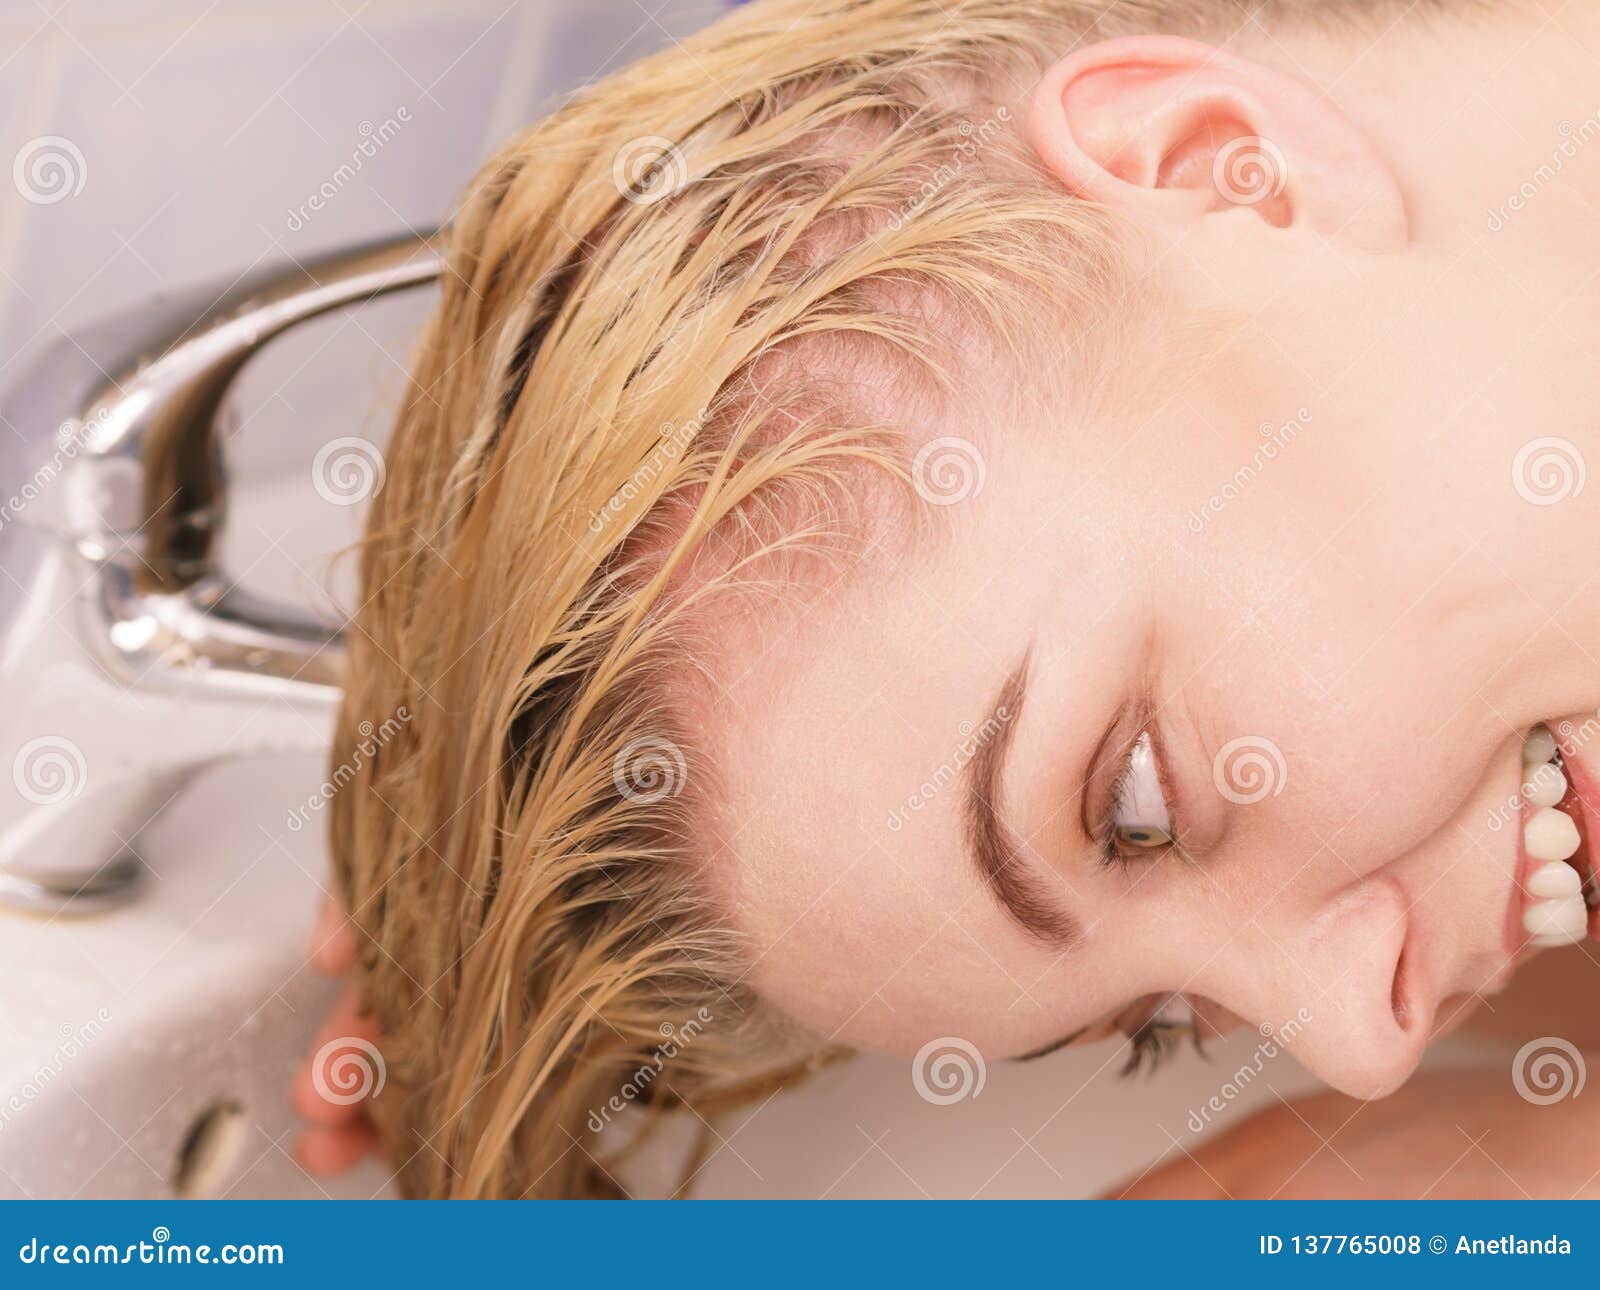 washing hair in bathroom sink